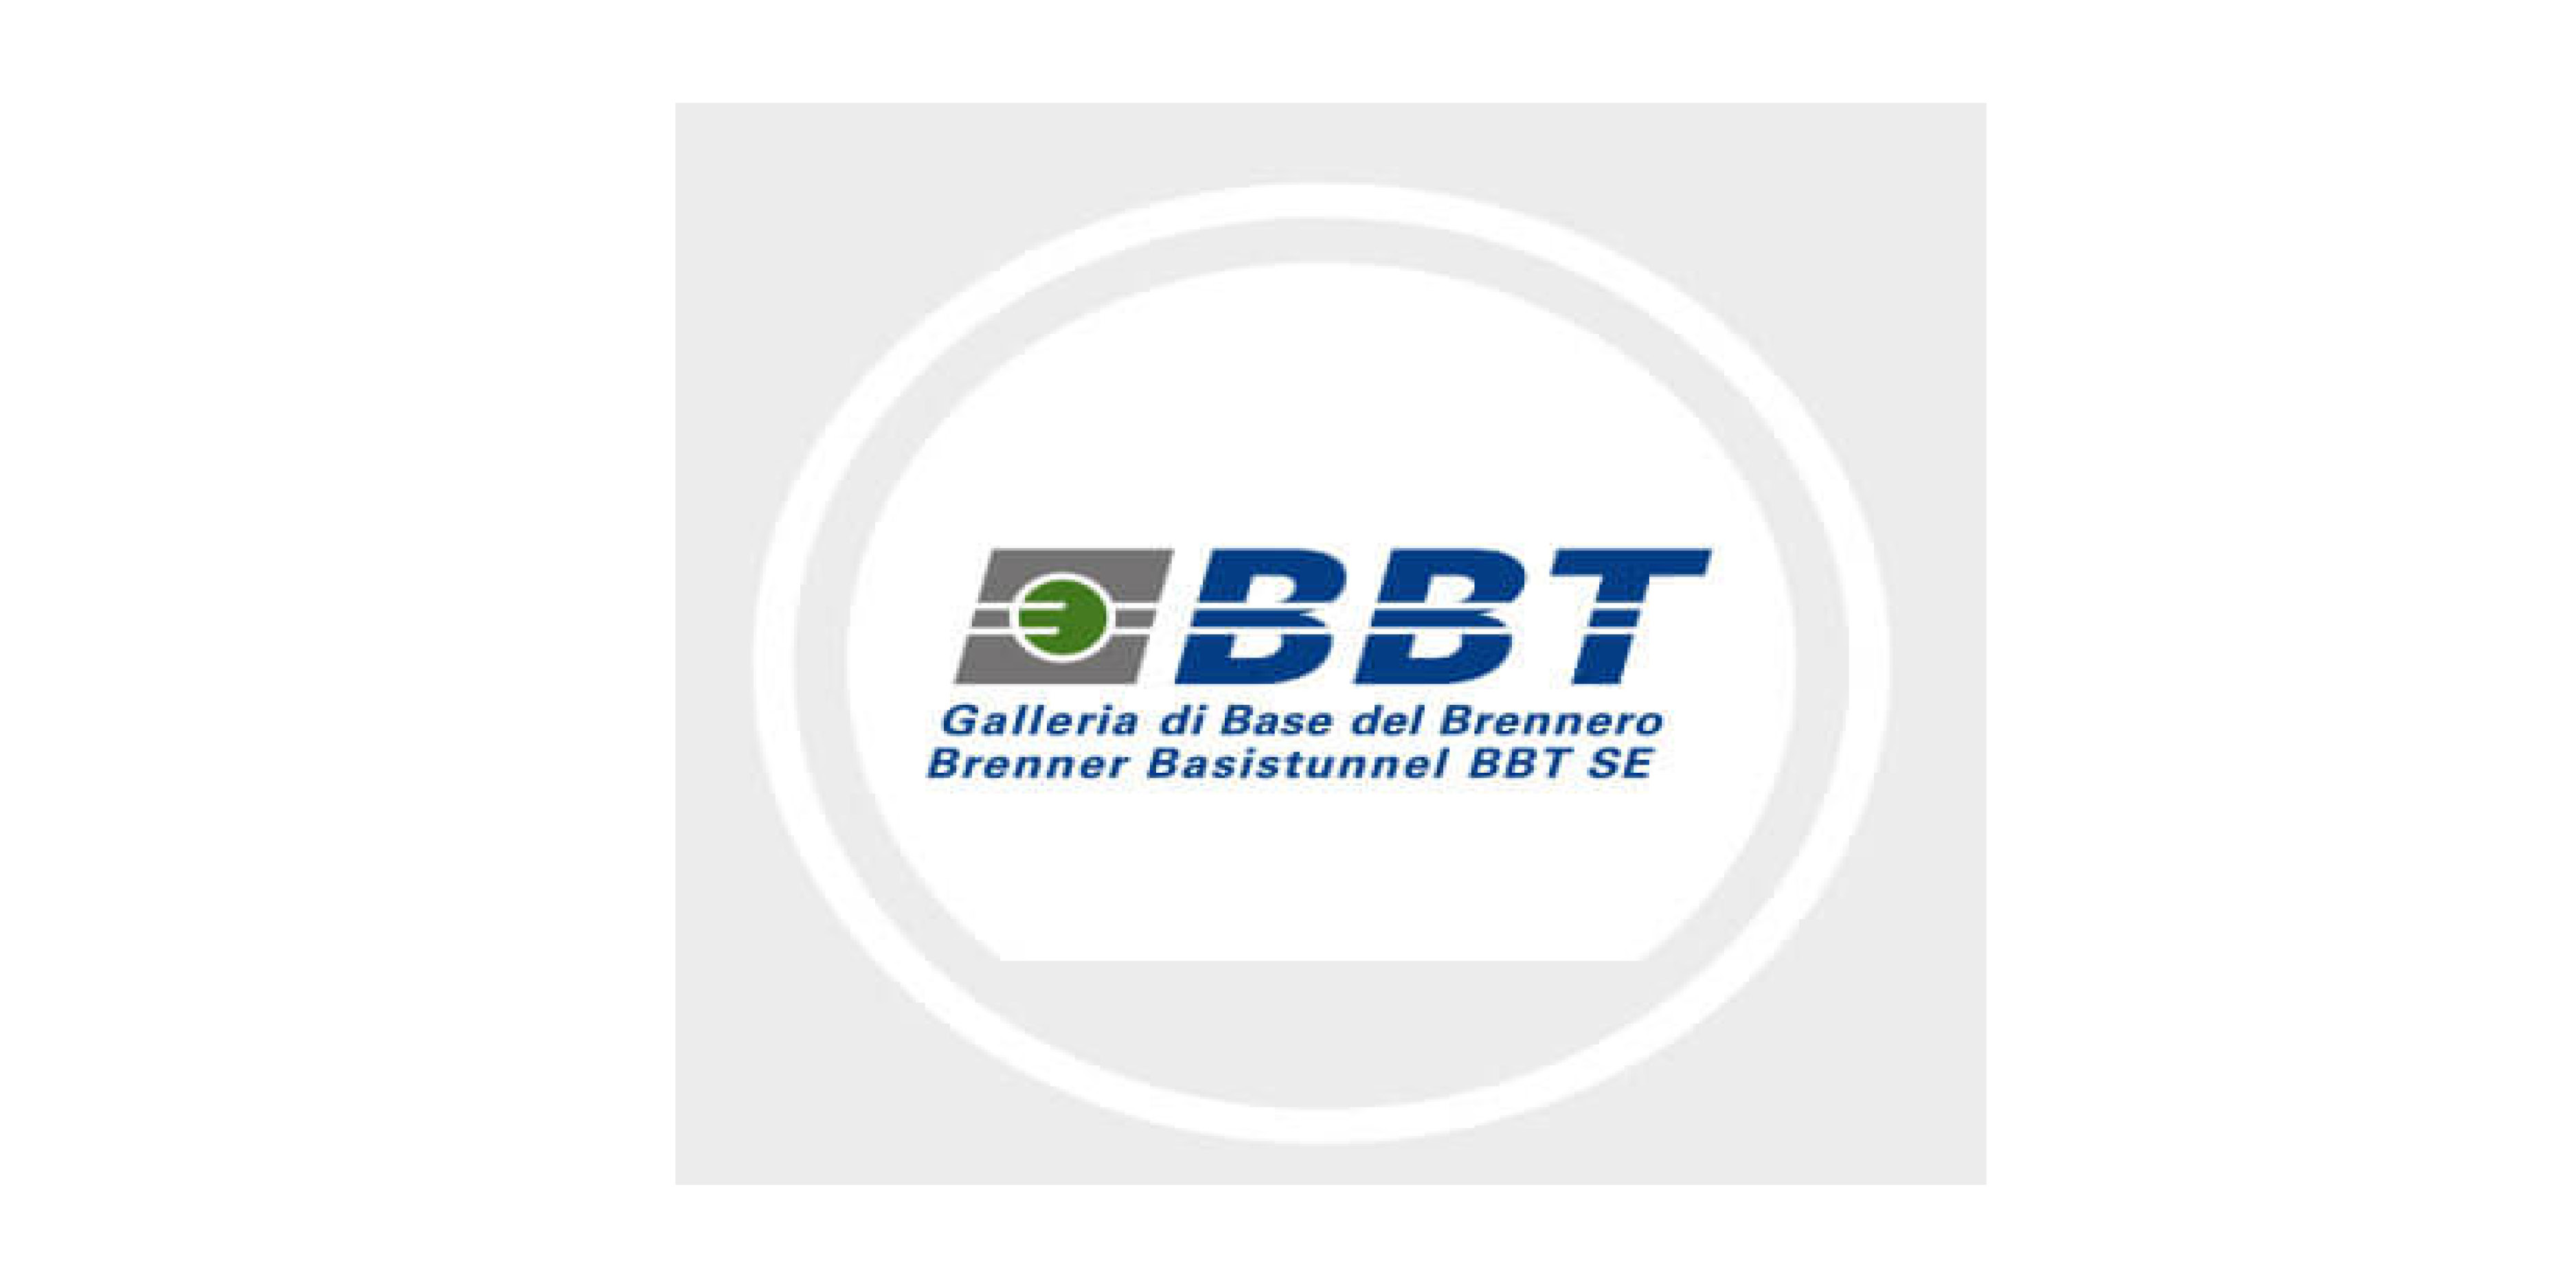 Brenner Basistunnel BBT SE